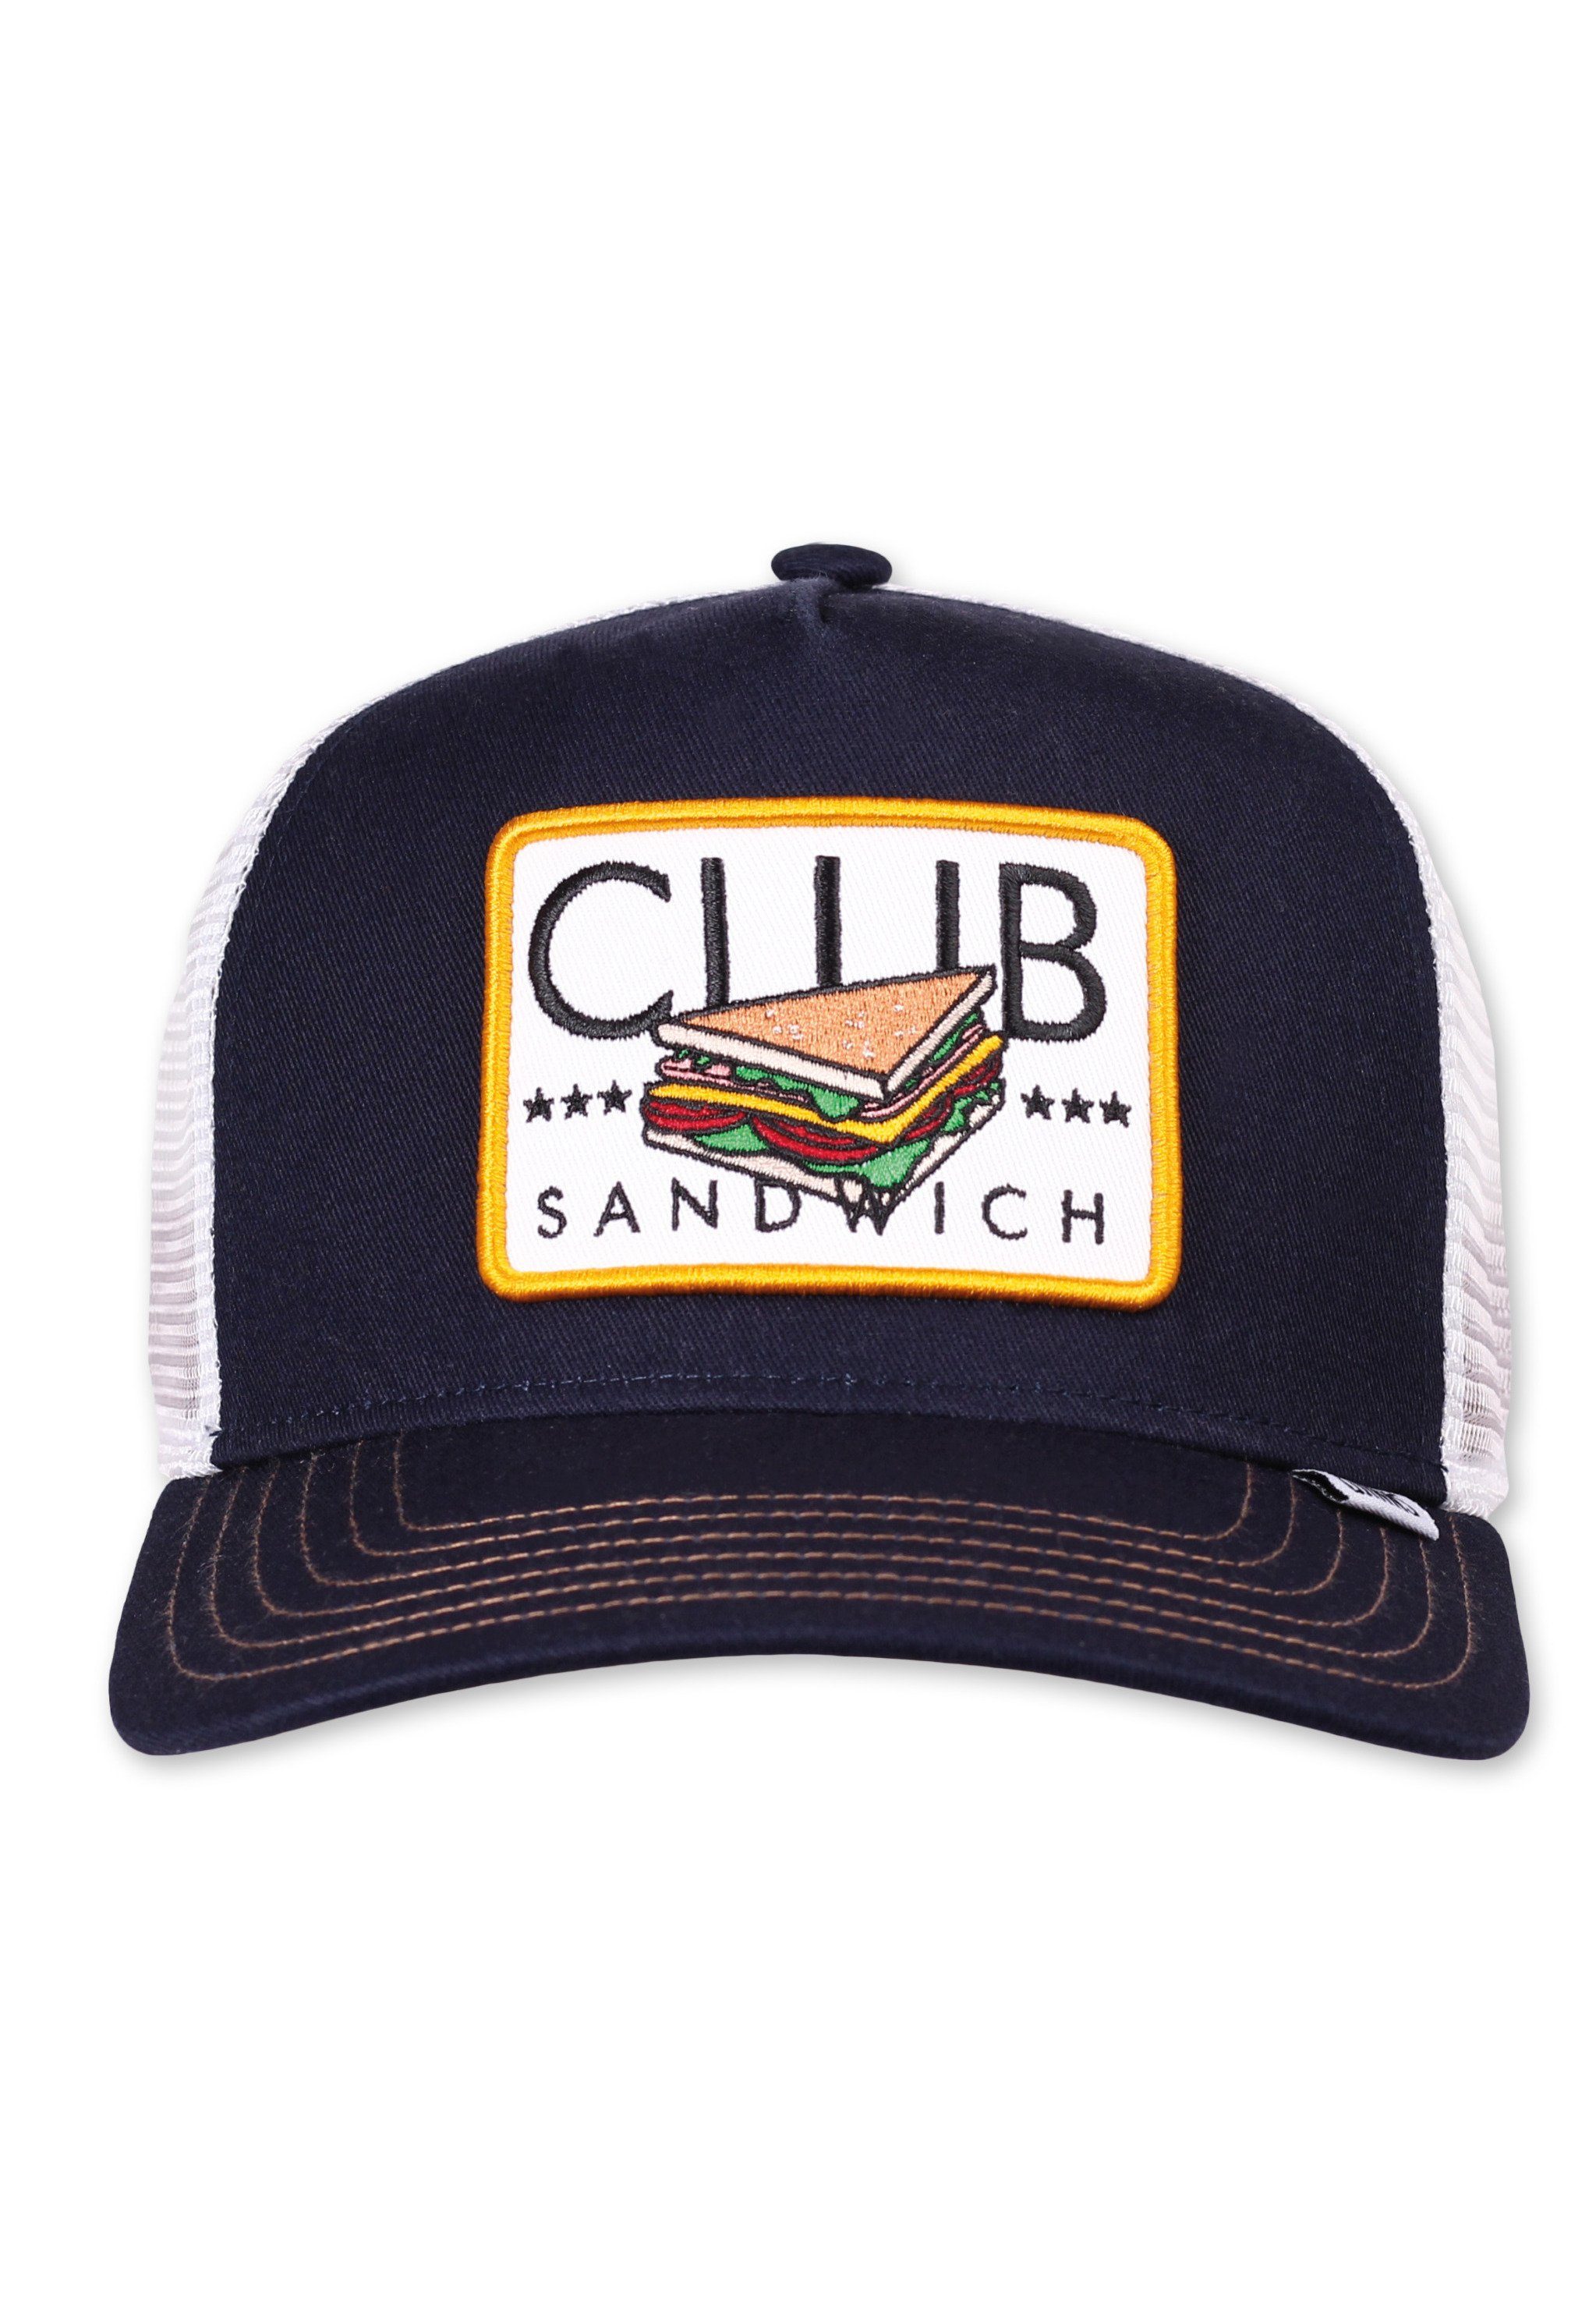 Neue Besonderheit! Djinns Trucker Cap HFT Cap Sandwich Club Food